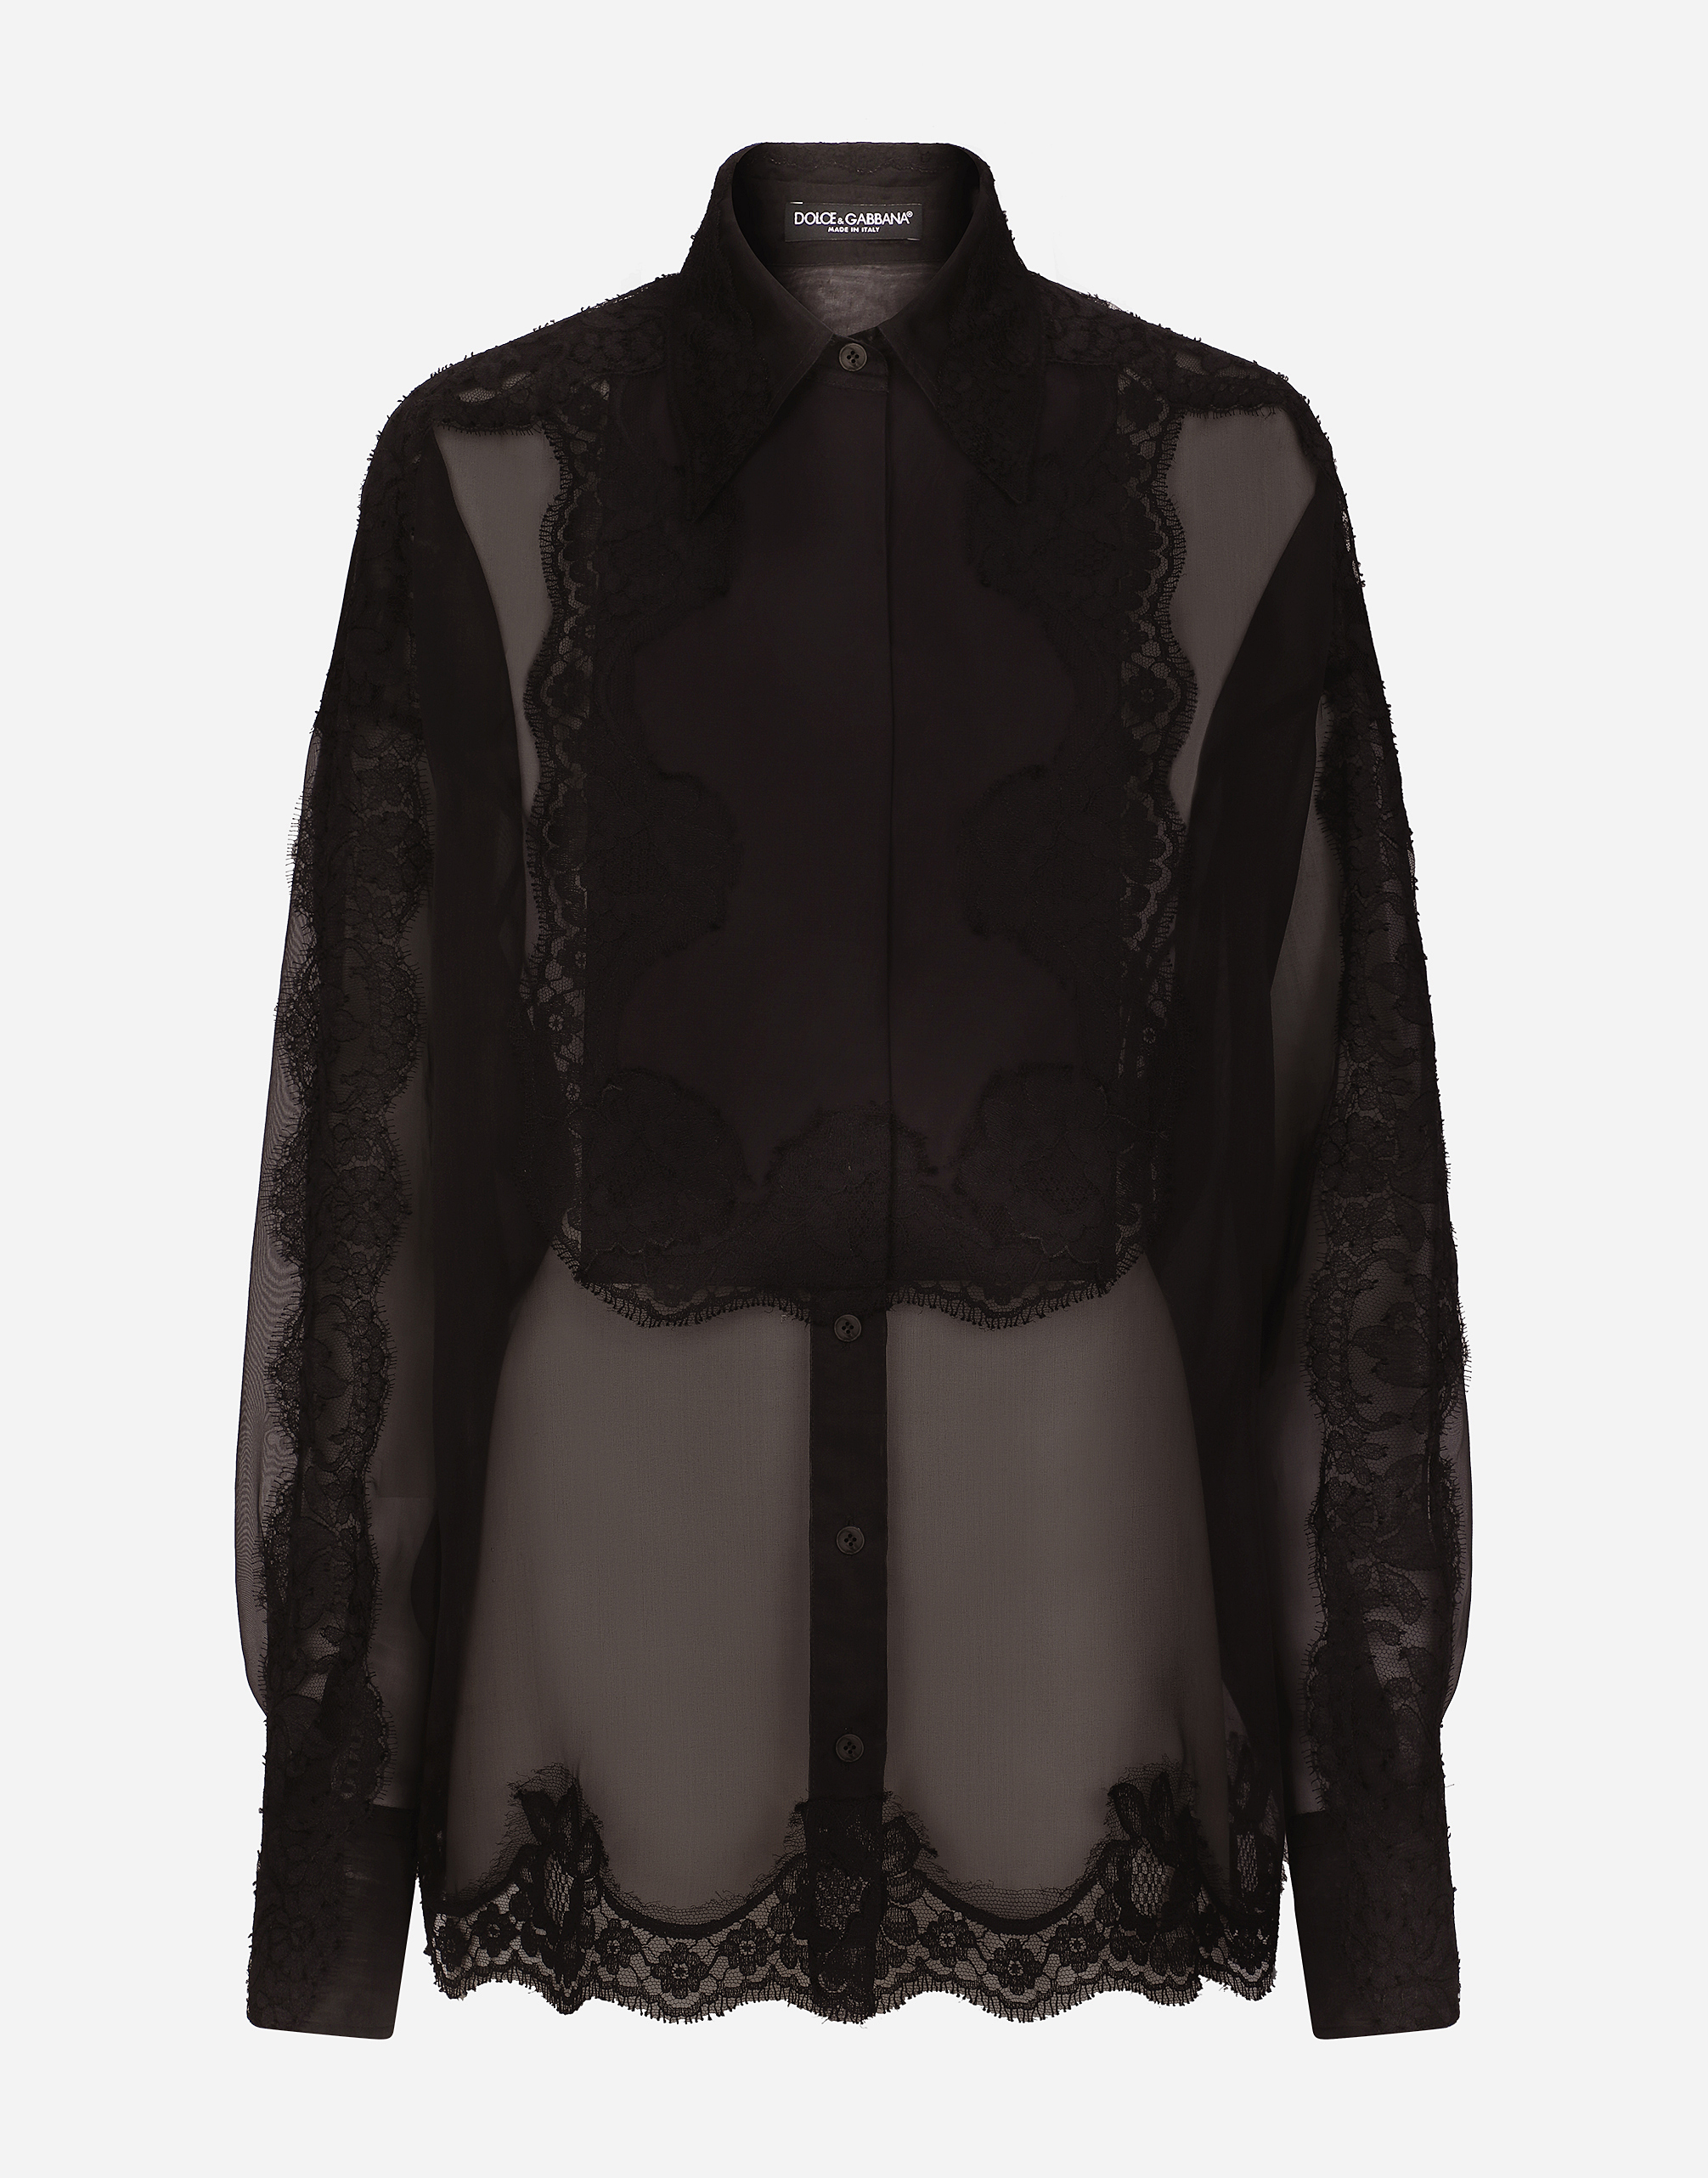 Dolce & Gabbana Organza Tuxedo Shirt With Lace Inserts In Black